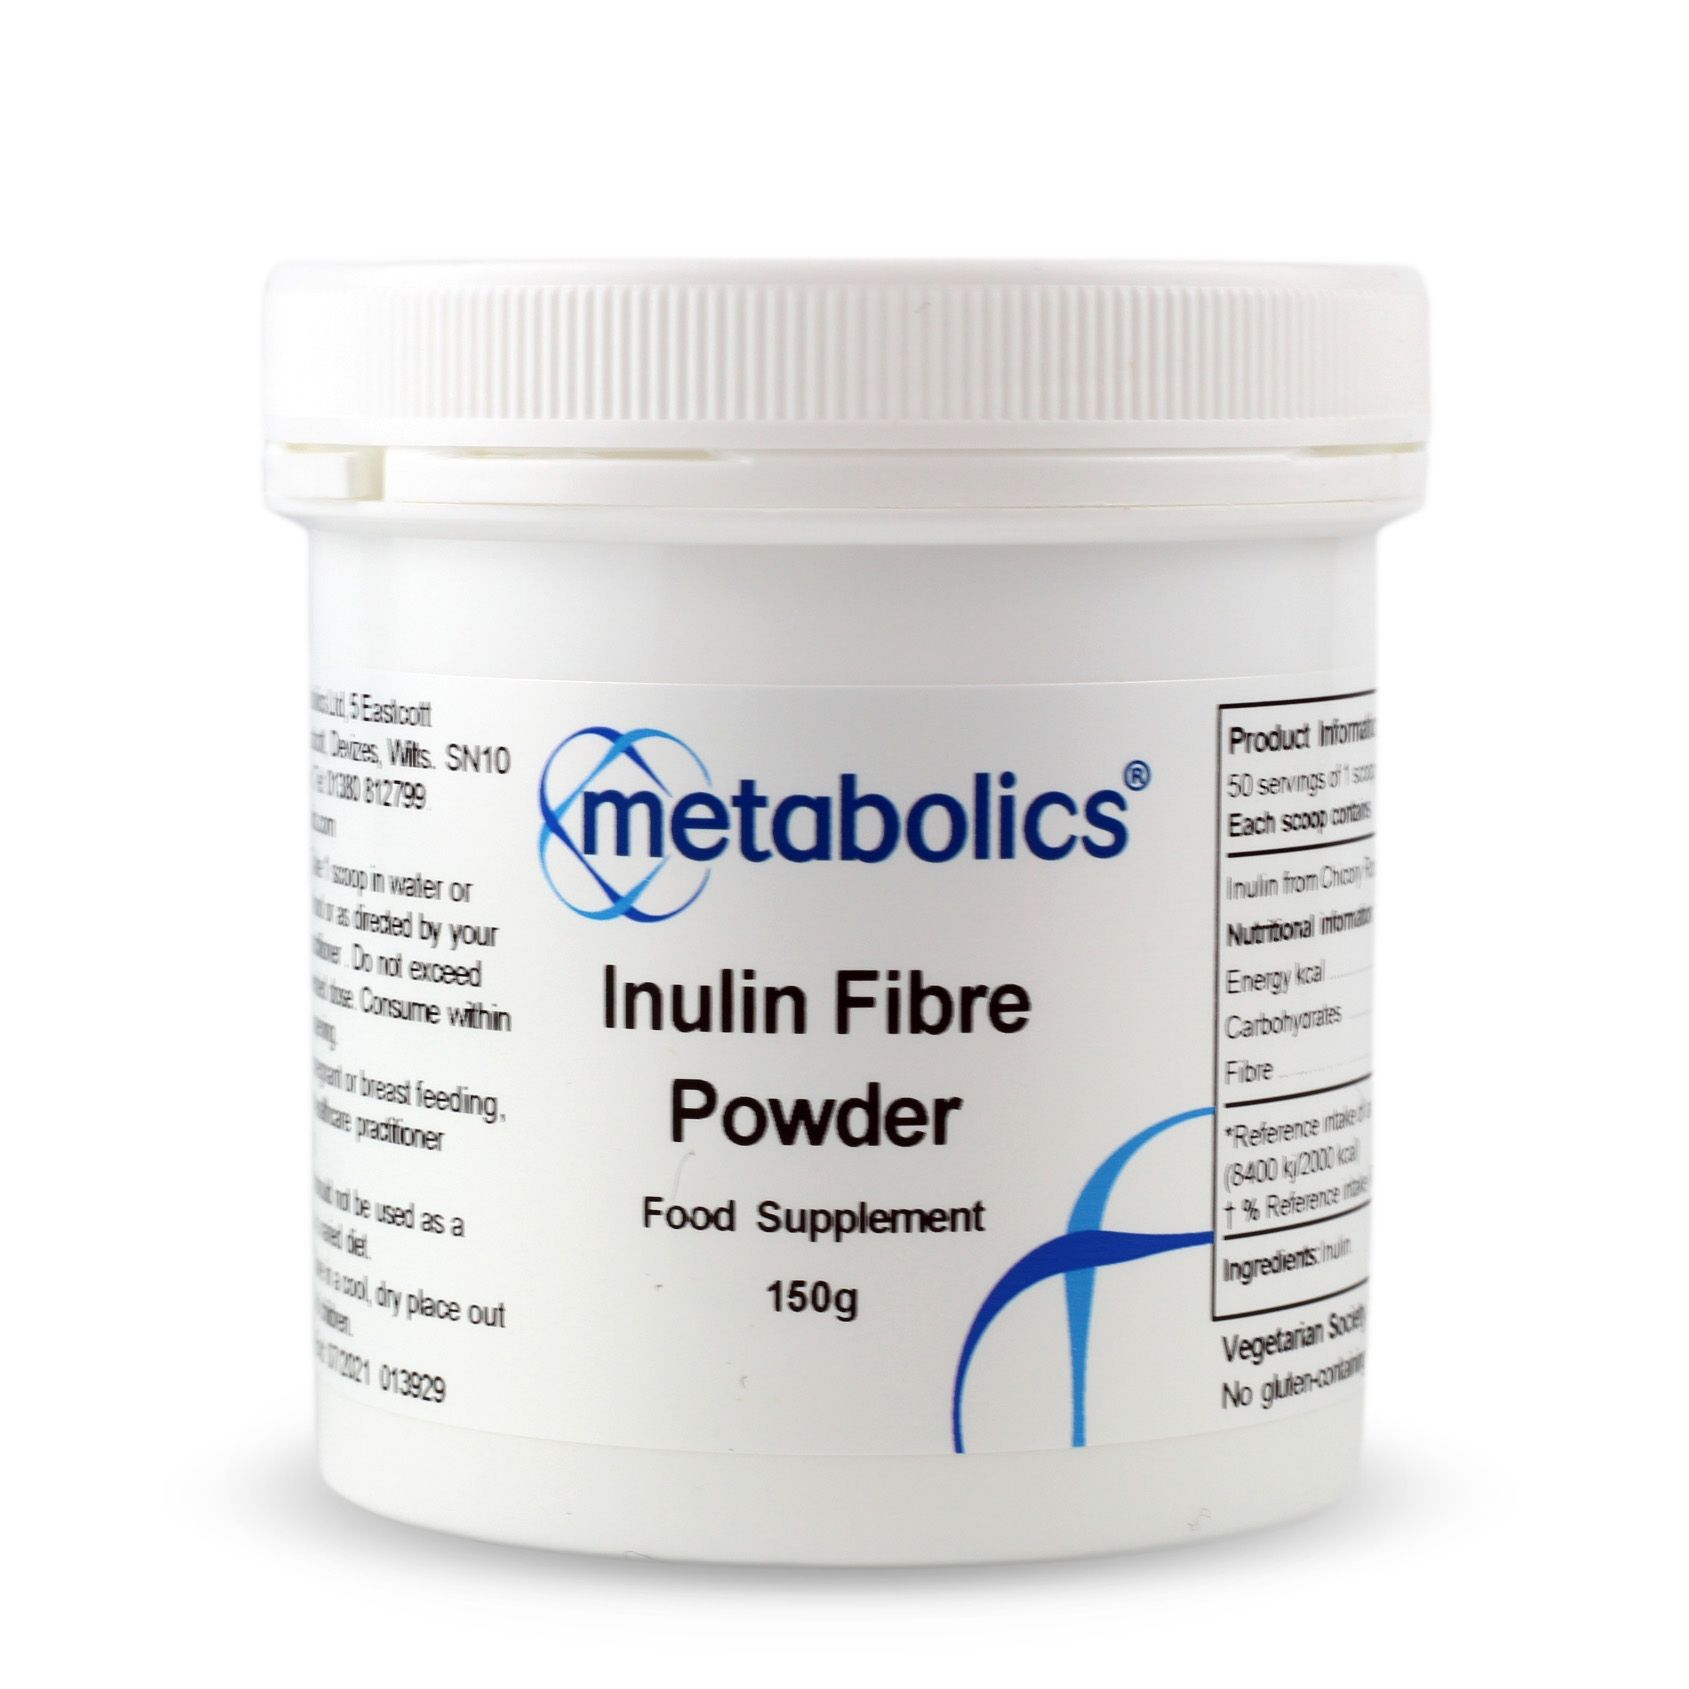 Inulin Fibre Powder (150g)